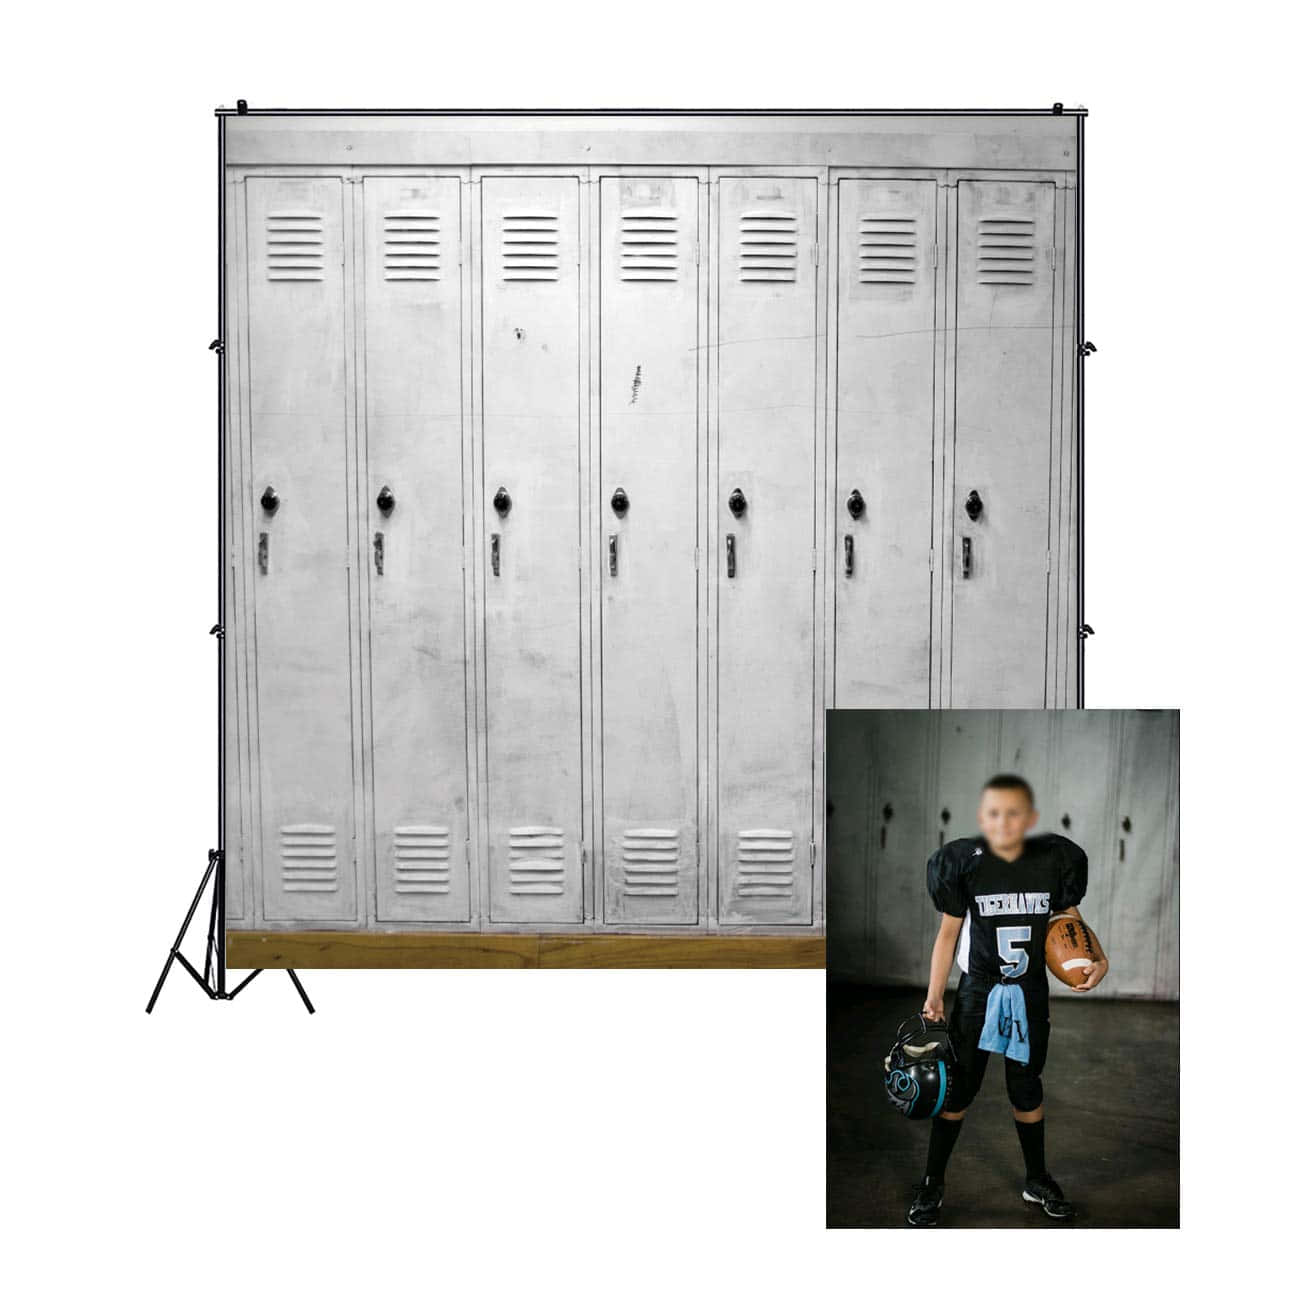 A Boy Is Standing Next To A Locker